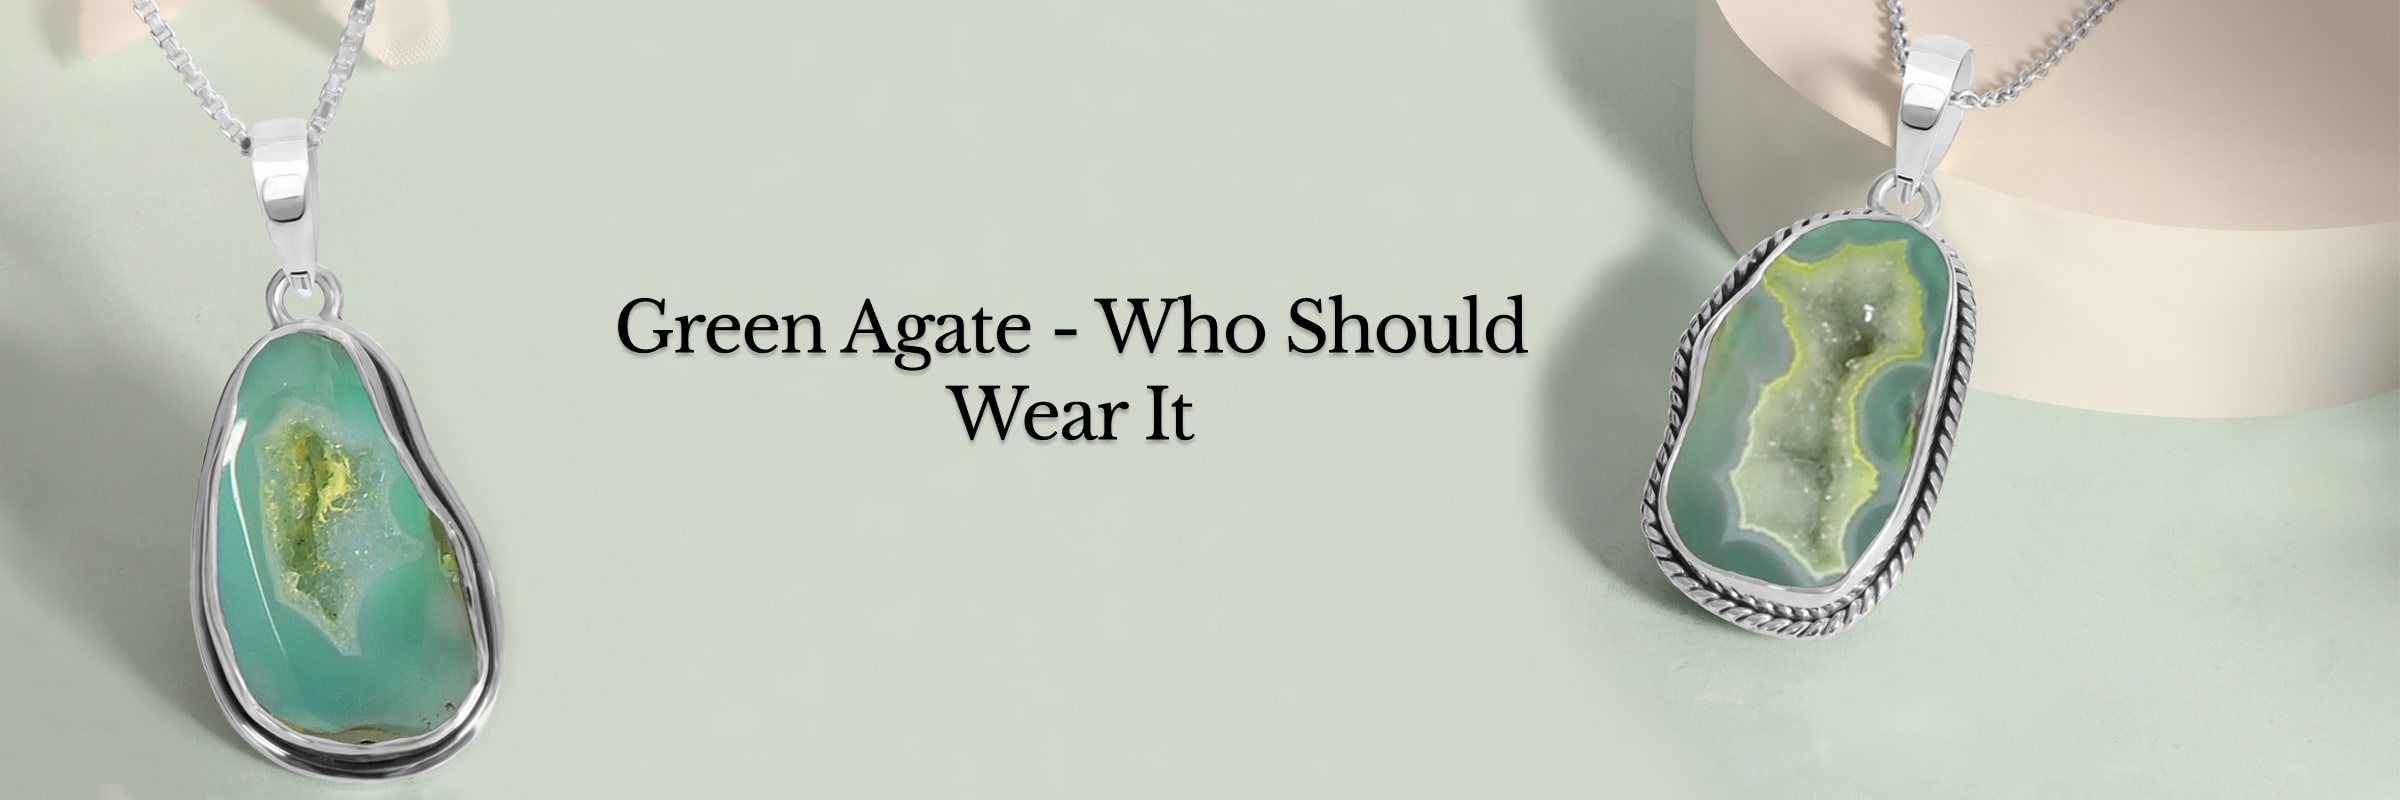 Who should wear Green Agate